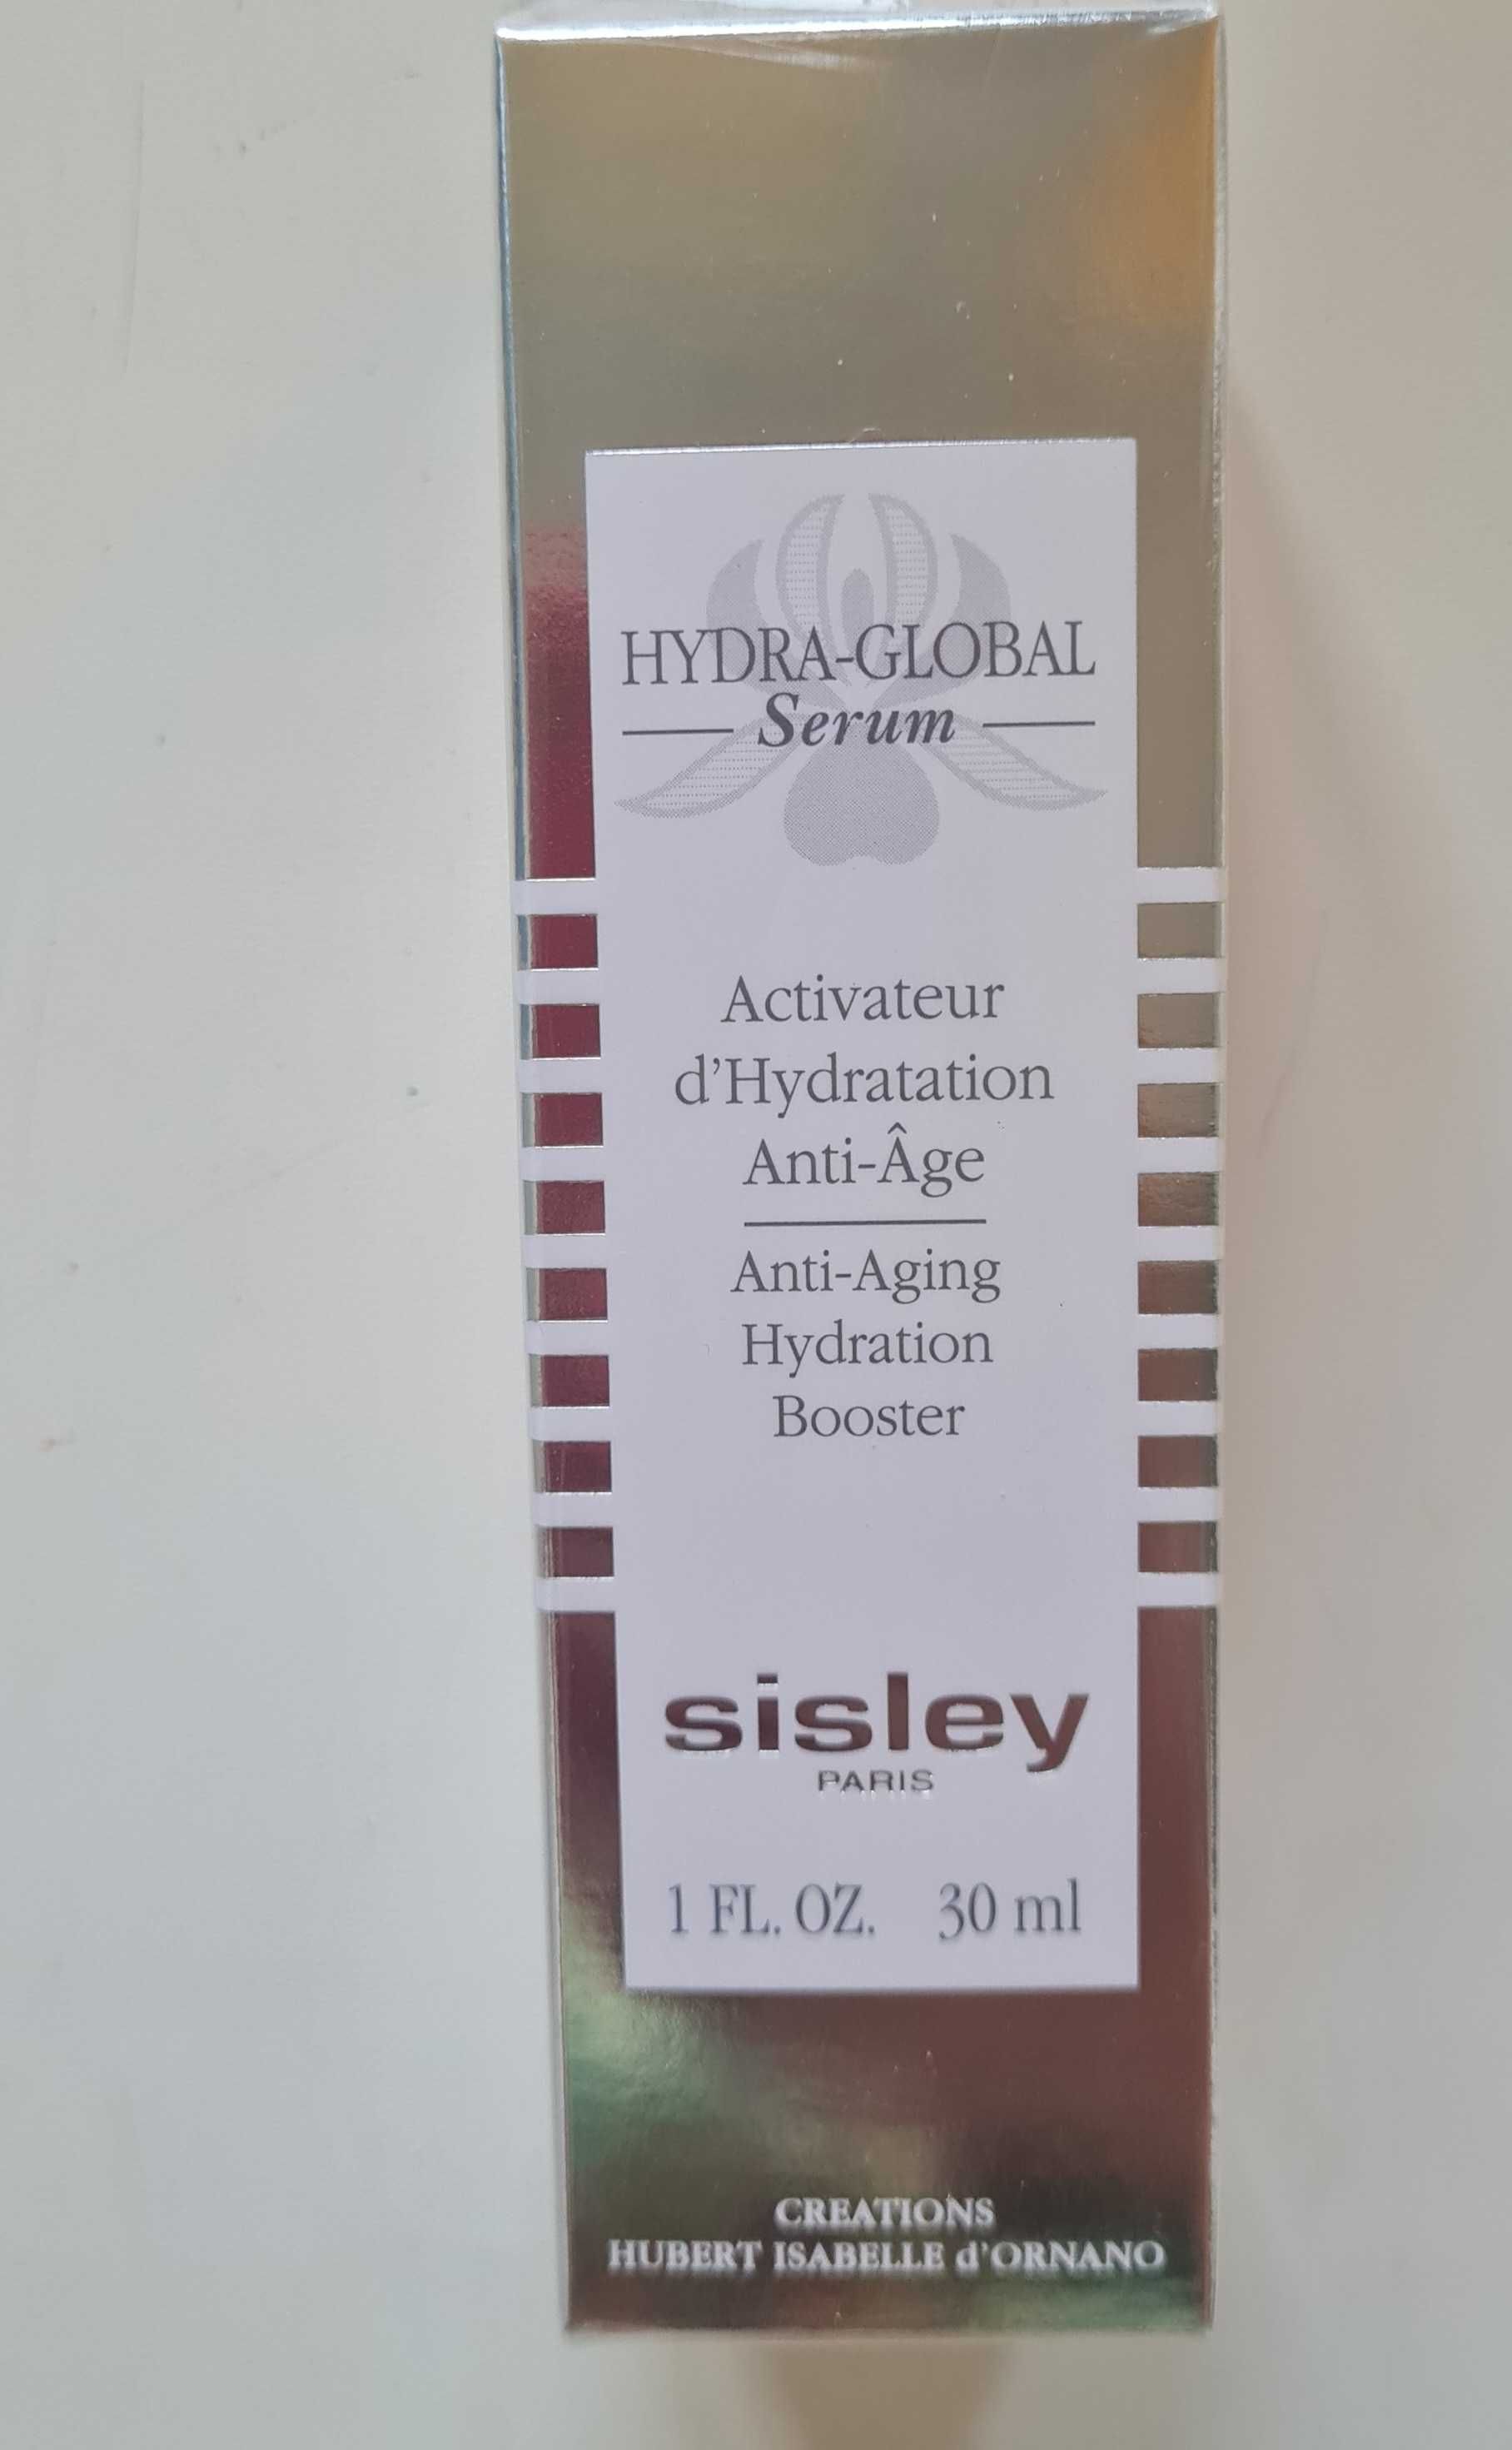 Увлажняющая сыворотка
Sisley Hydra-Global Serum Anti-aging Hydration